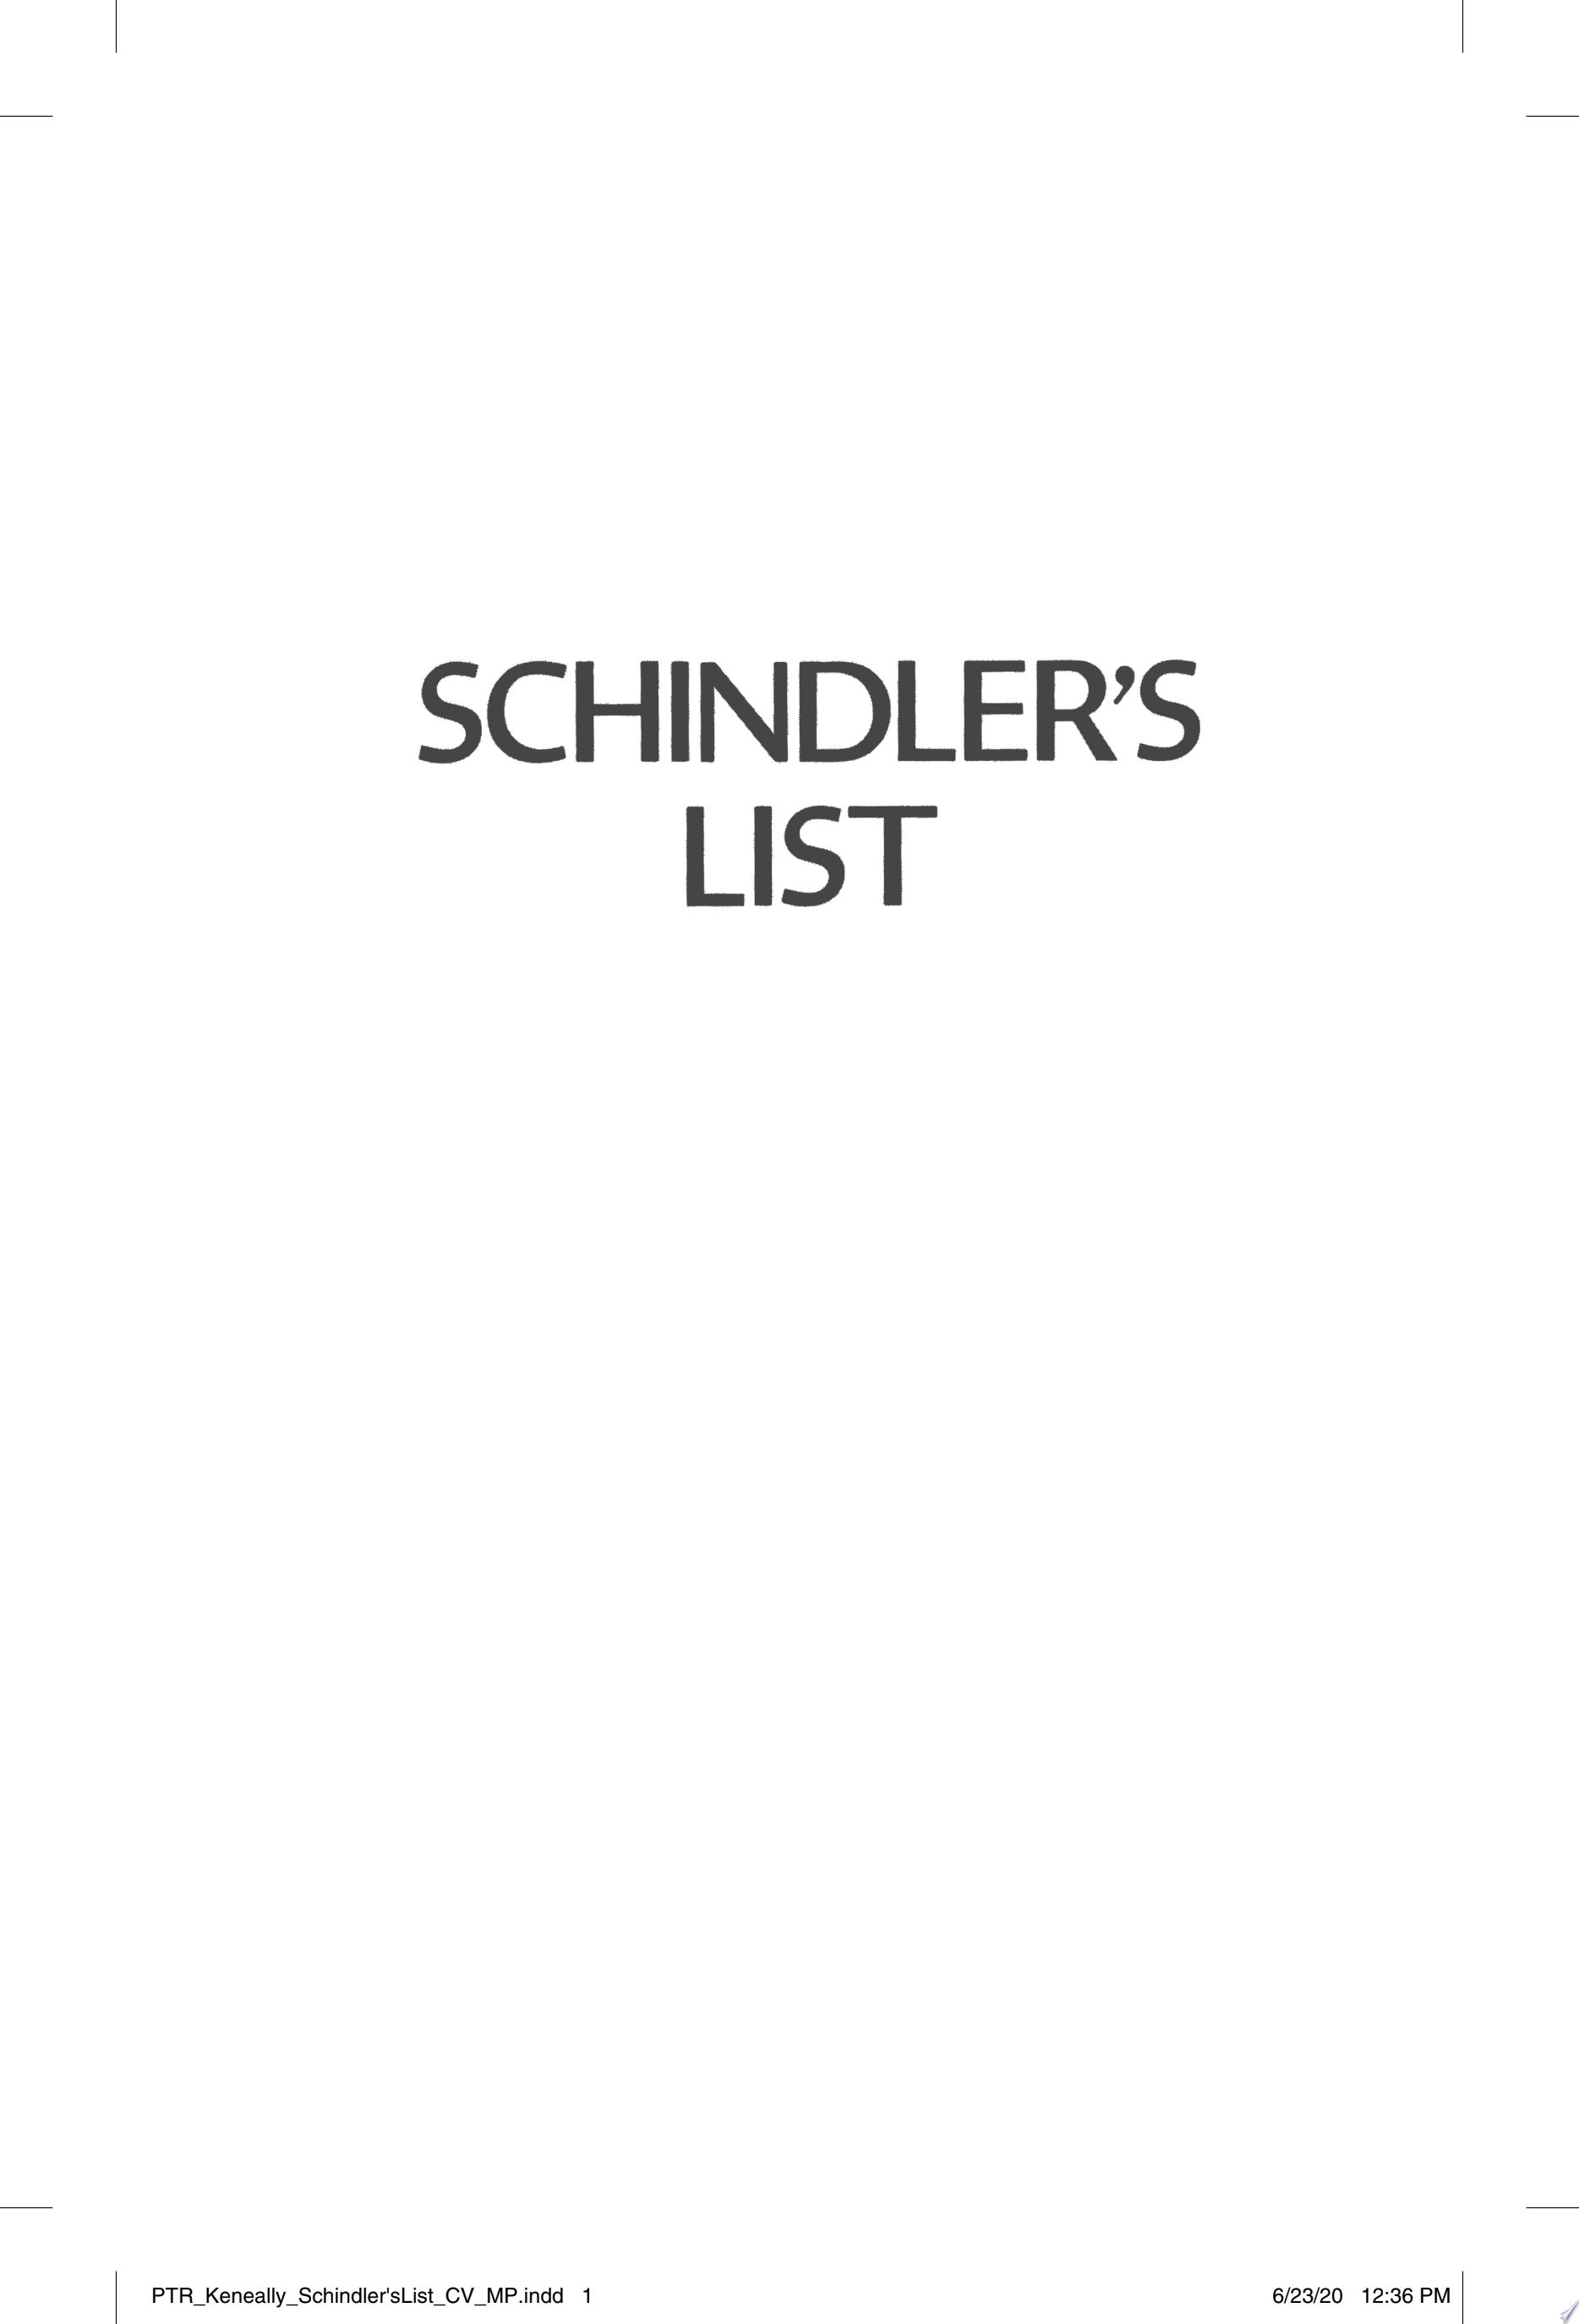 Image for "Schindler&#039;s List"